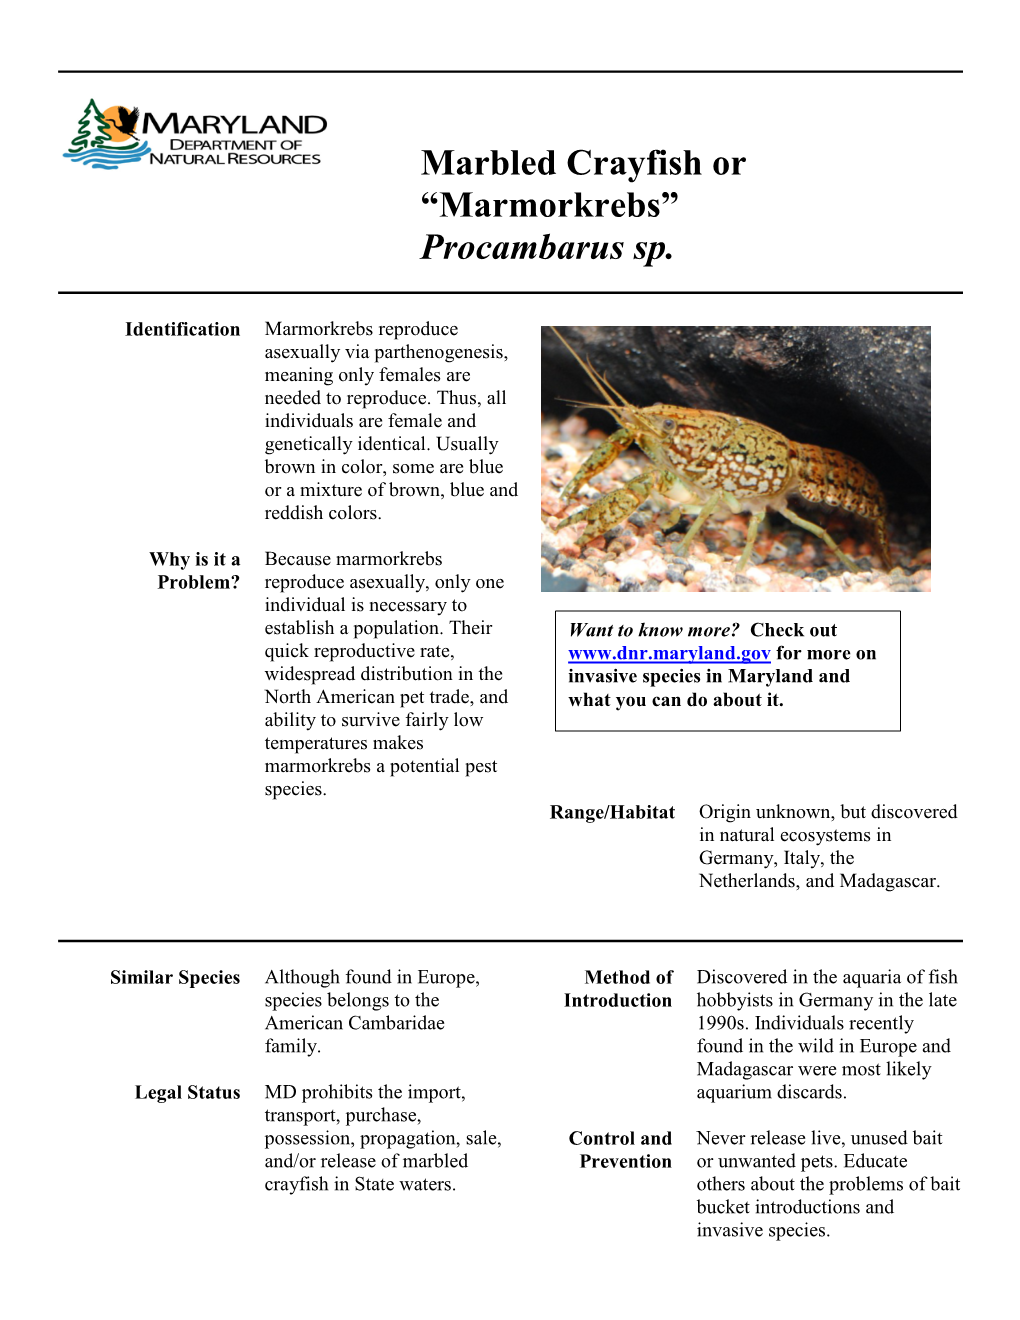 Marbled Crayfish Or “Marmorkrebs” Procambarus Sp